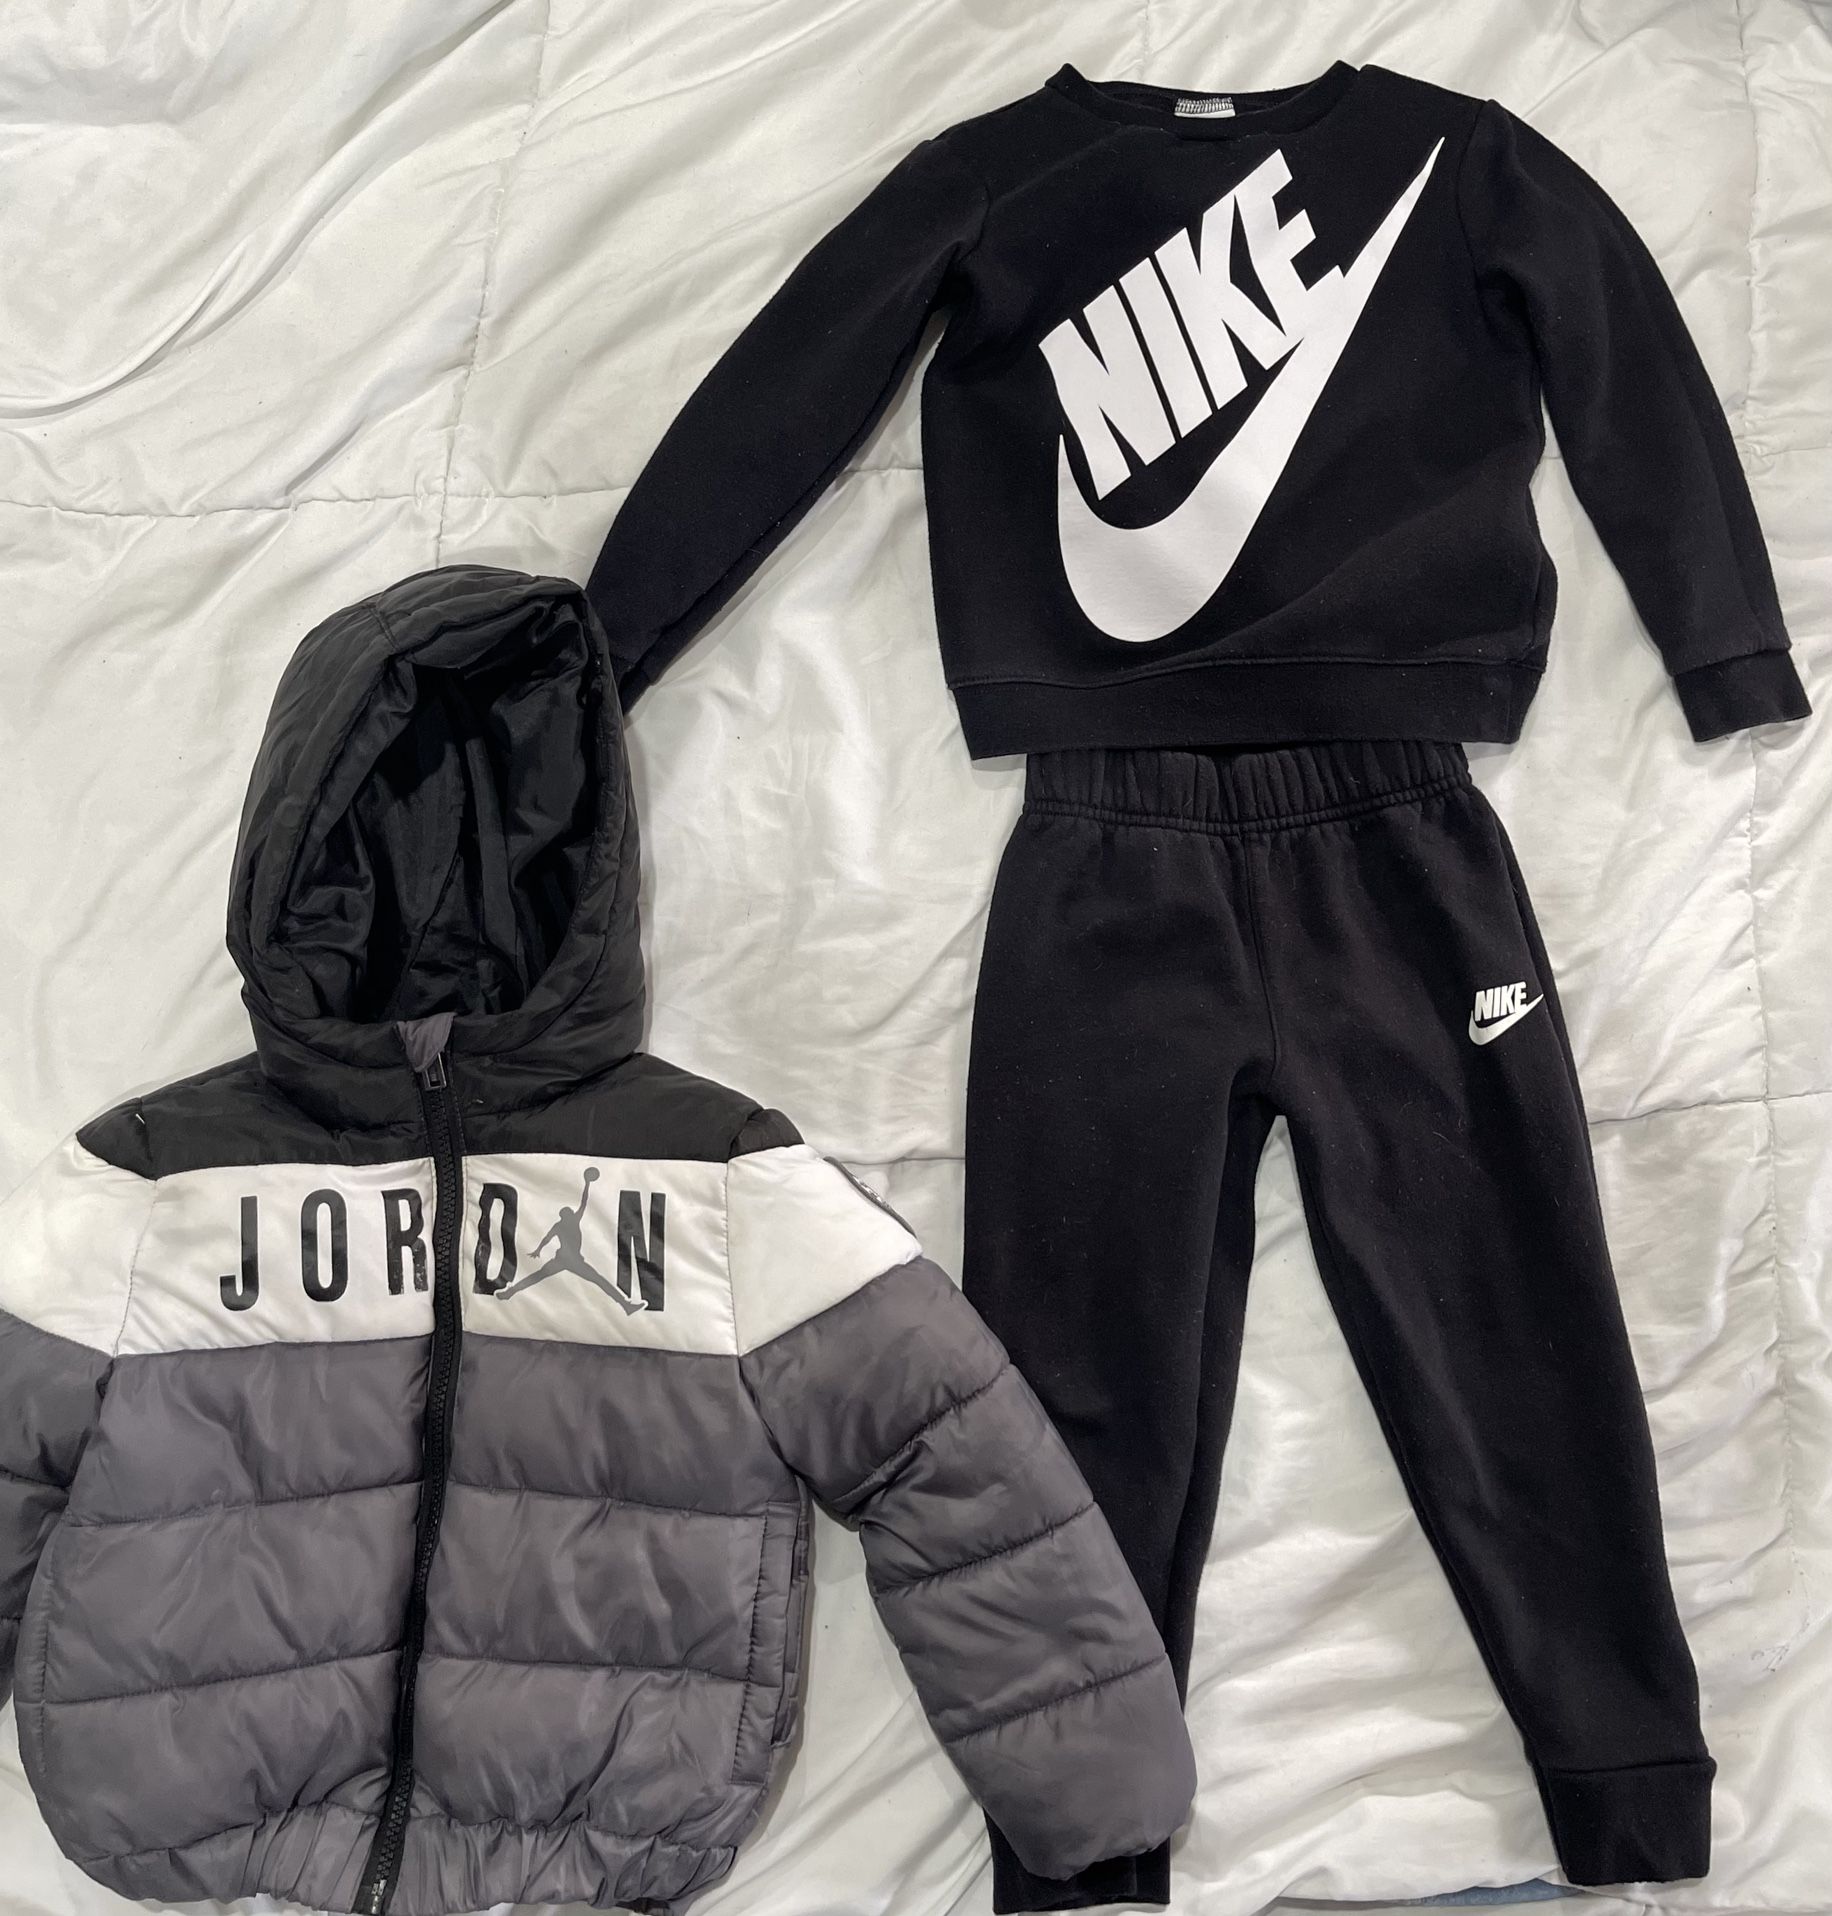 Nike/Jordan